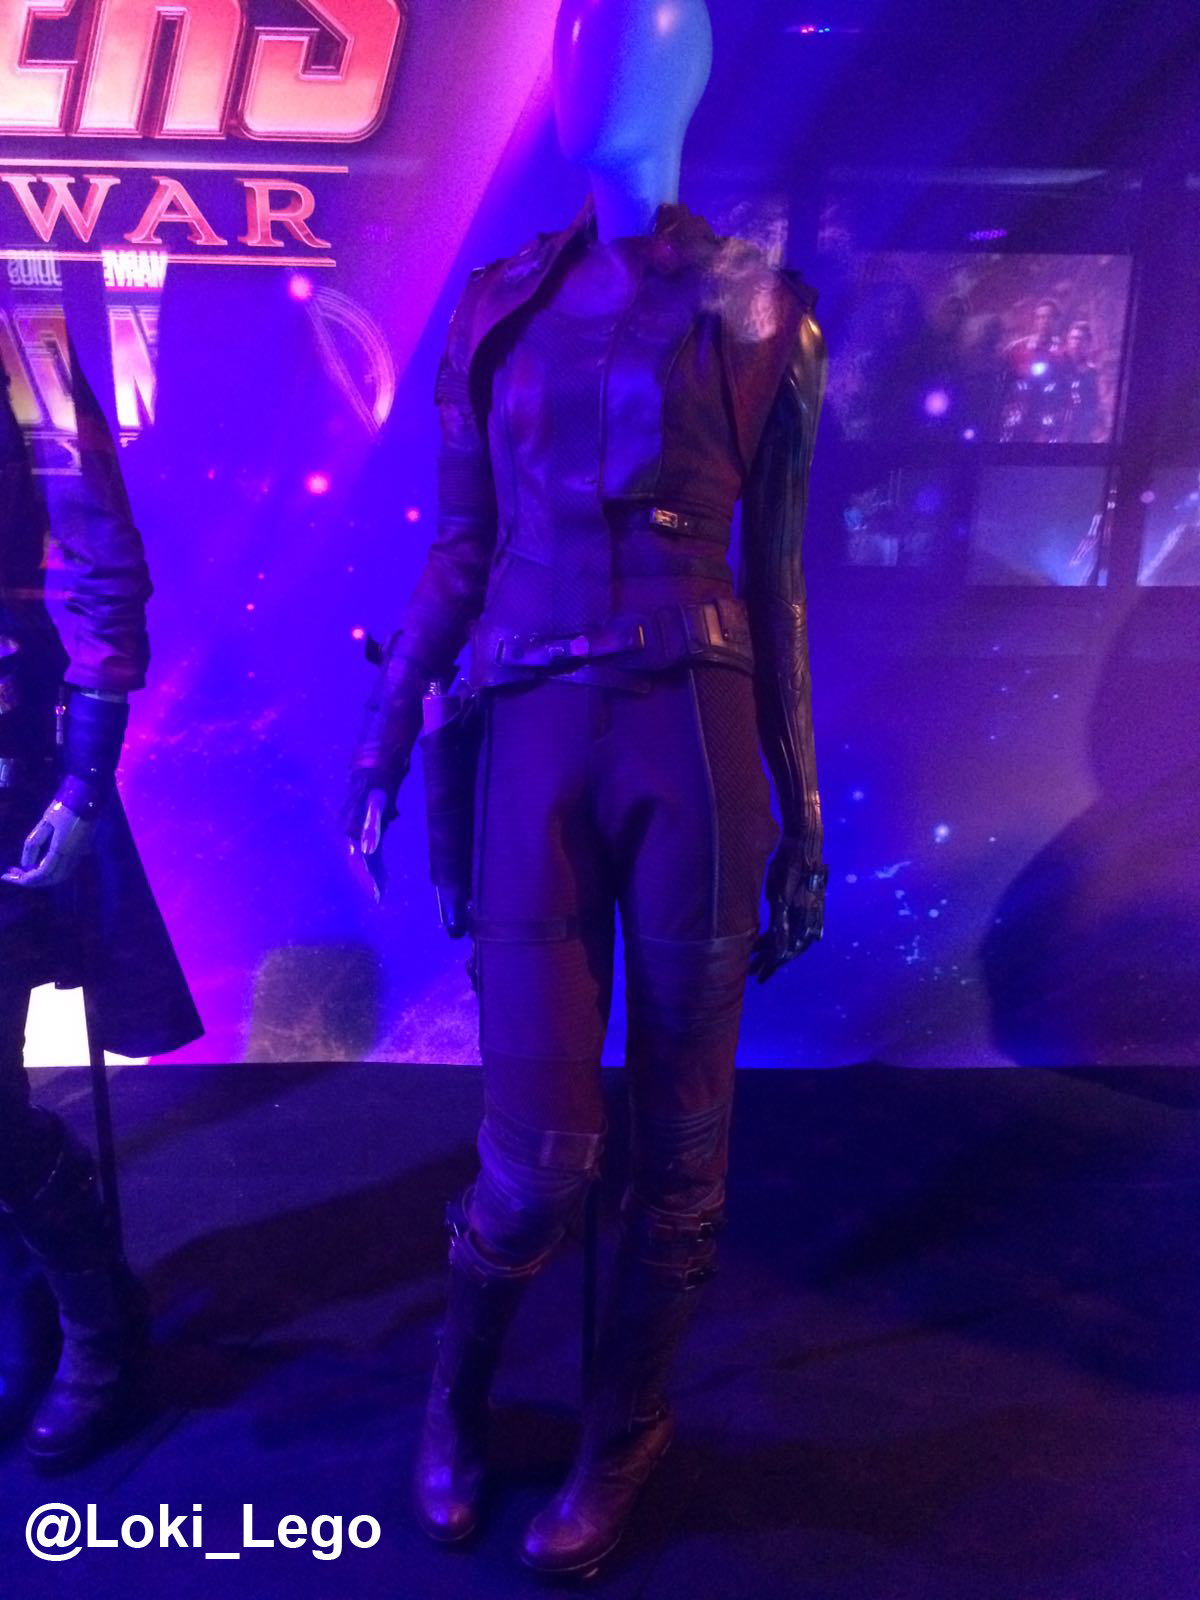 Avengers: Infinity War costumes at the El Capitan Theatre - Future Ruler of Midgard1200 x 1600